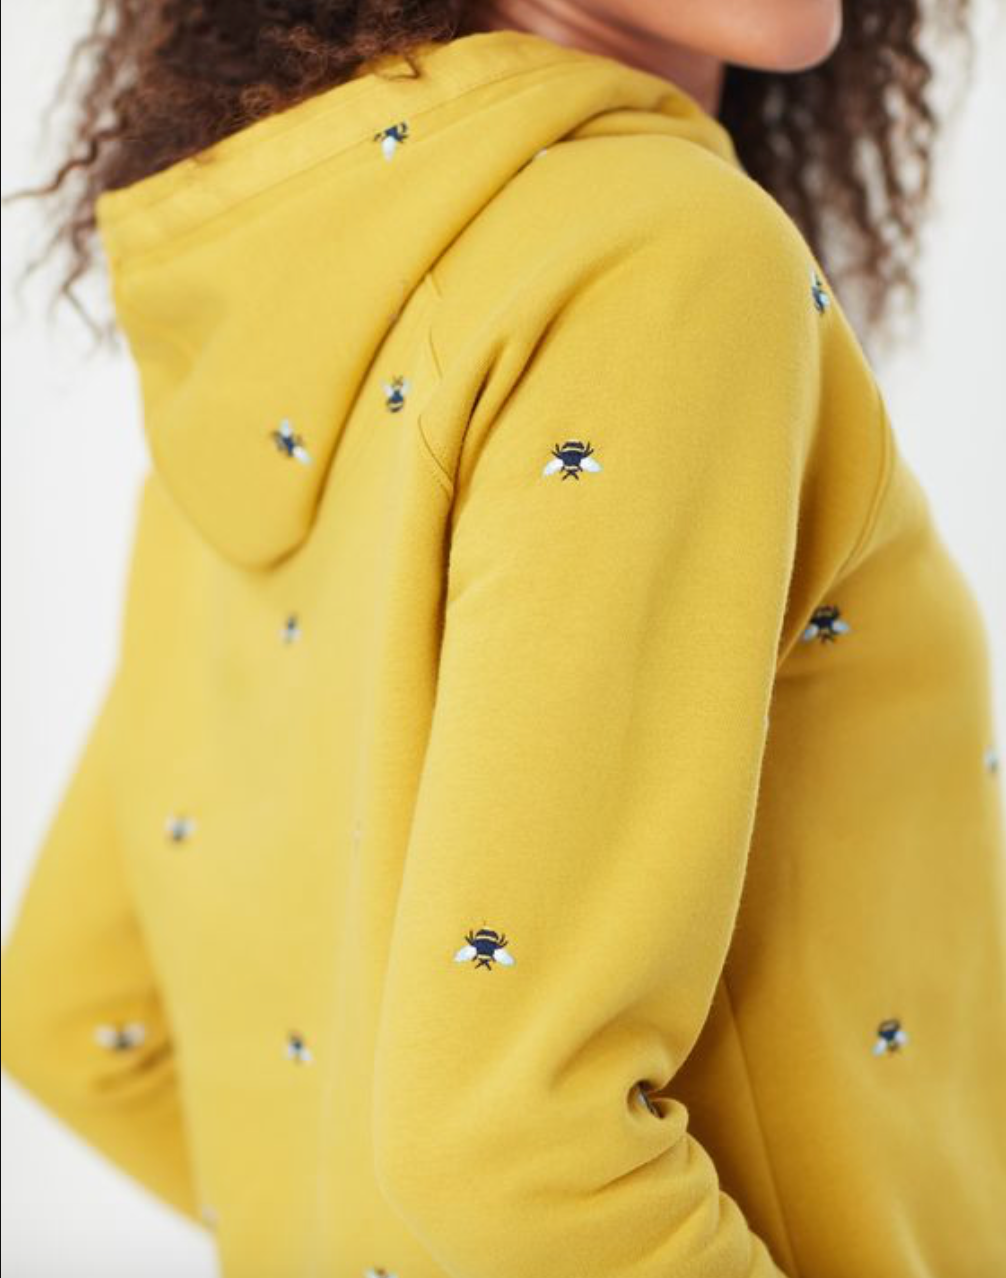 Rowley Embroidered Hooded Sweatshirt in Yellow Bee